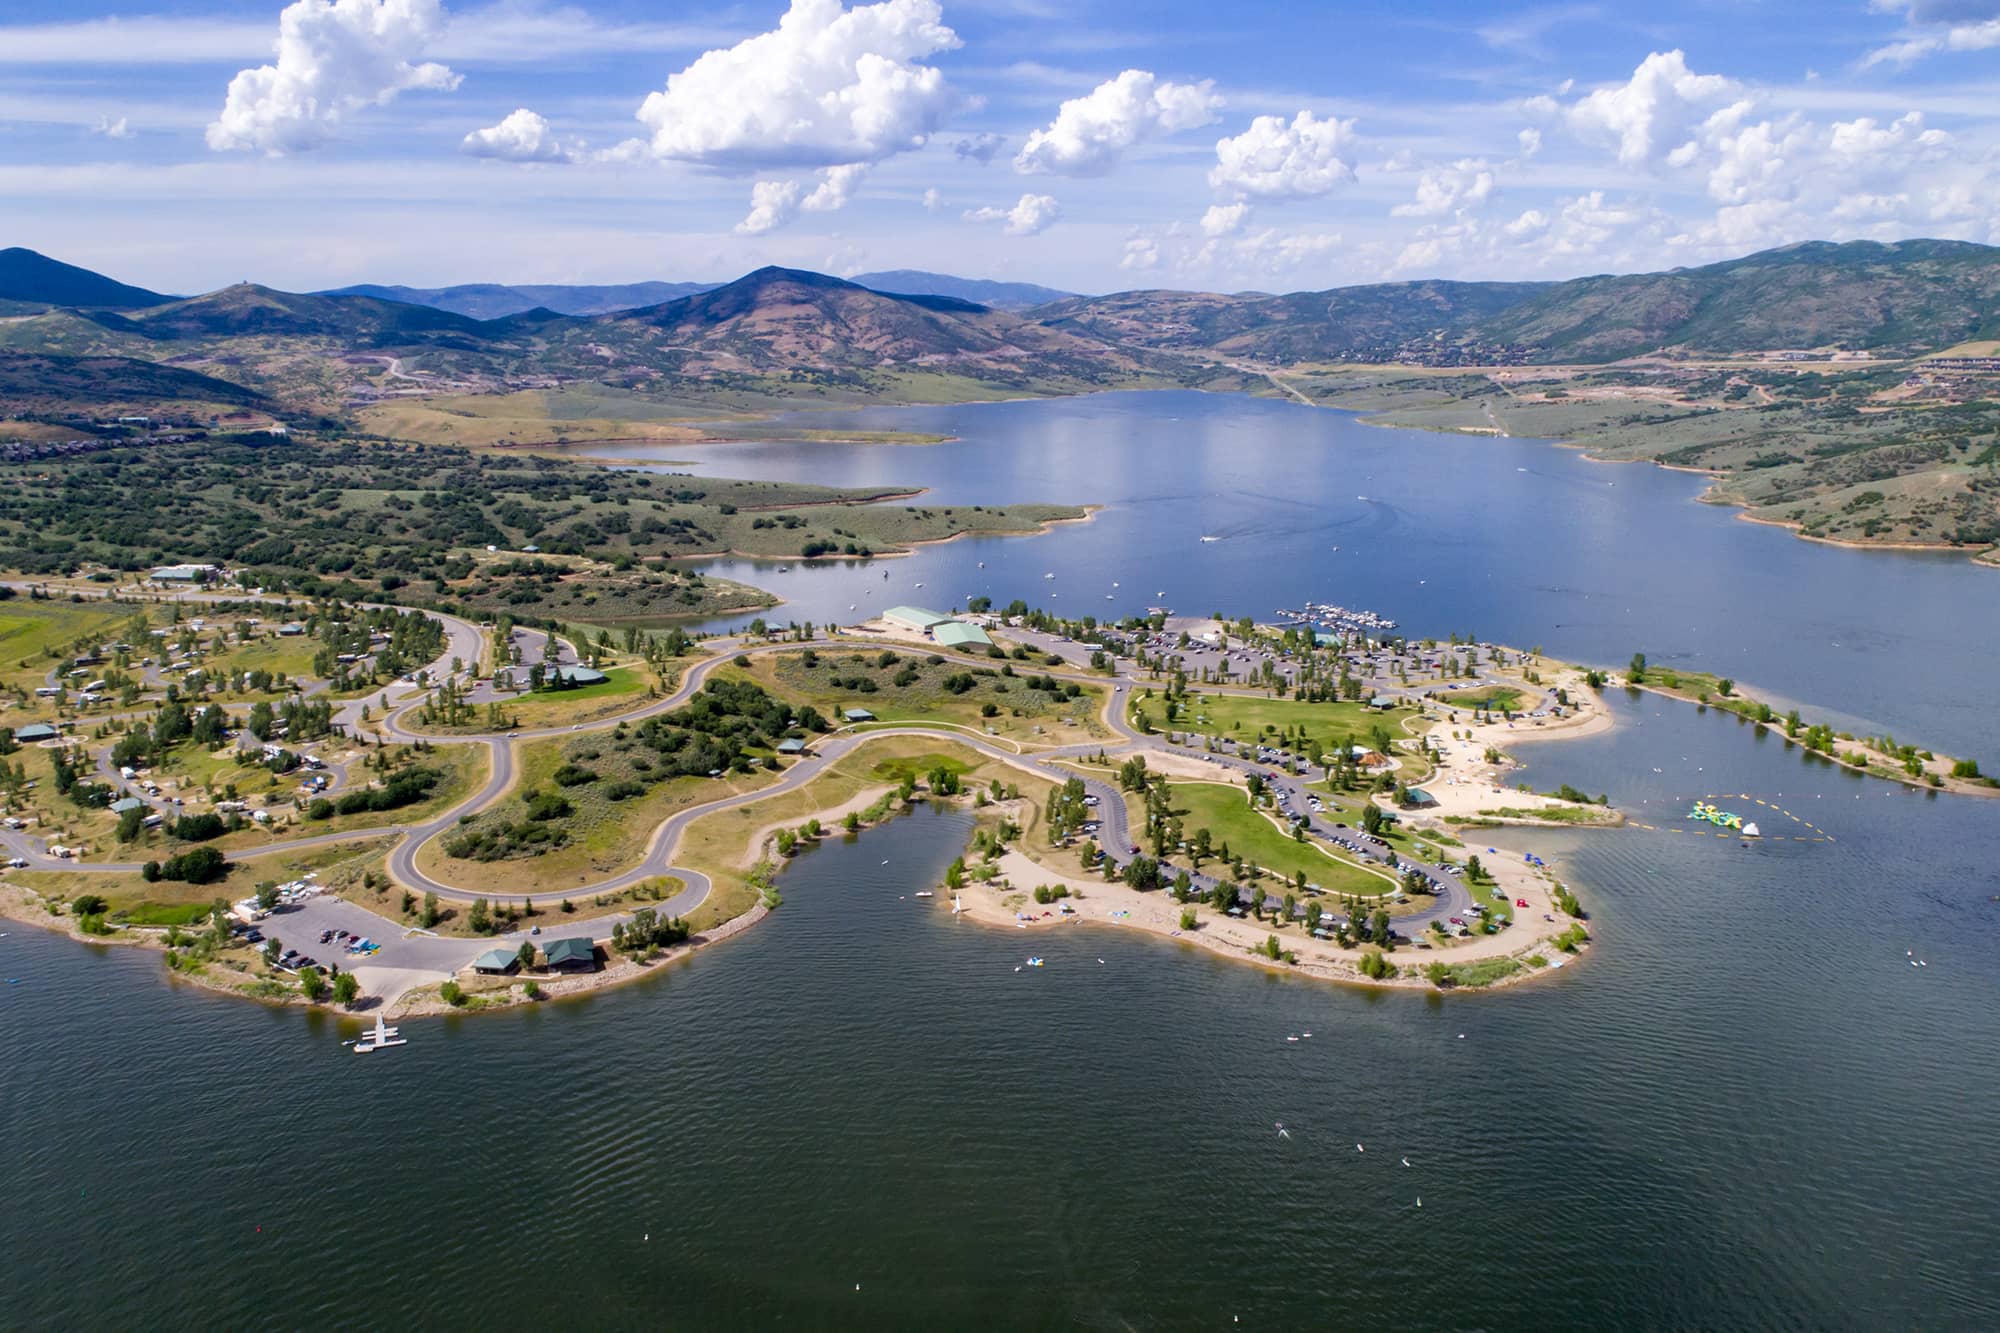 Jordanelle reservoir aerial view